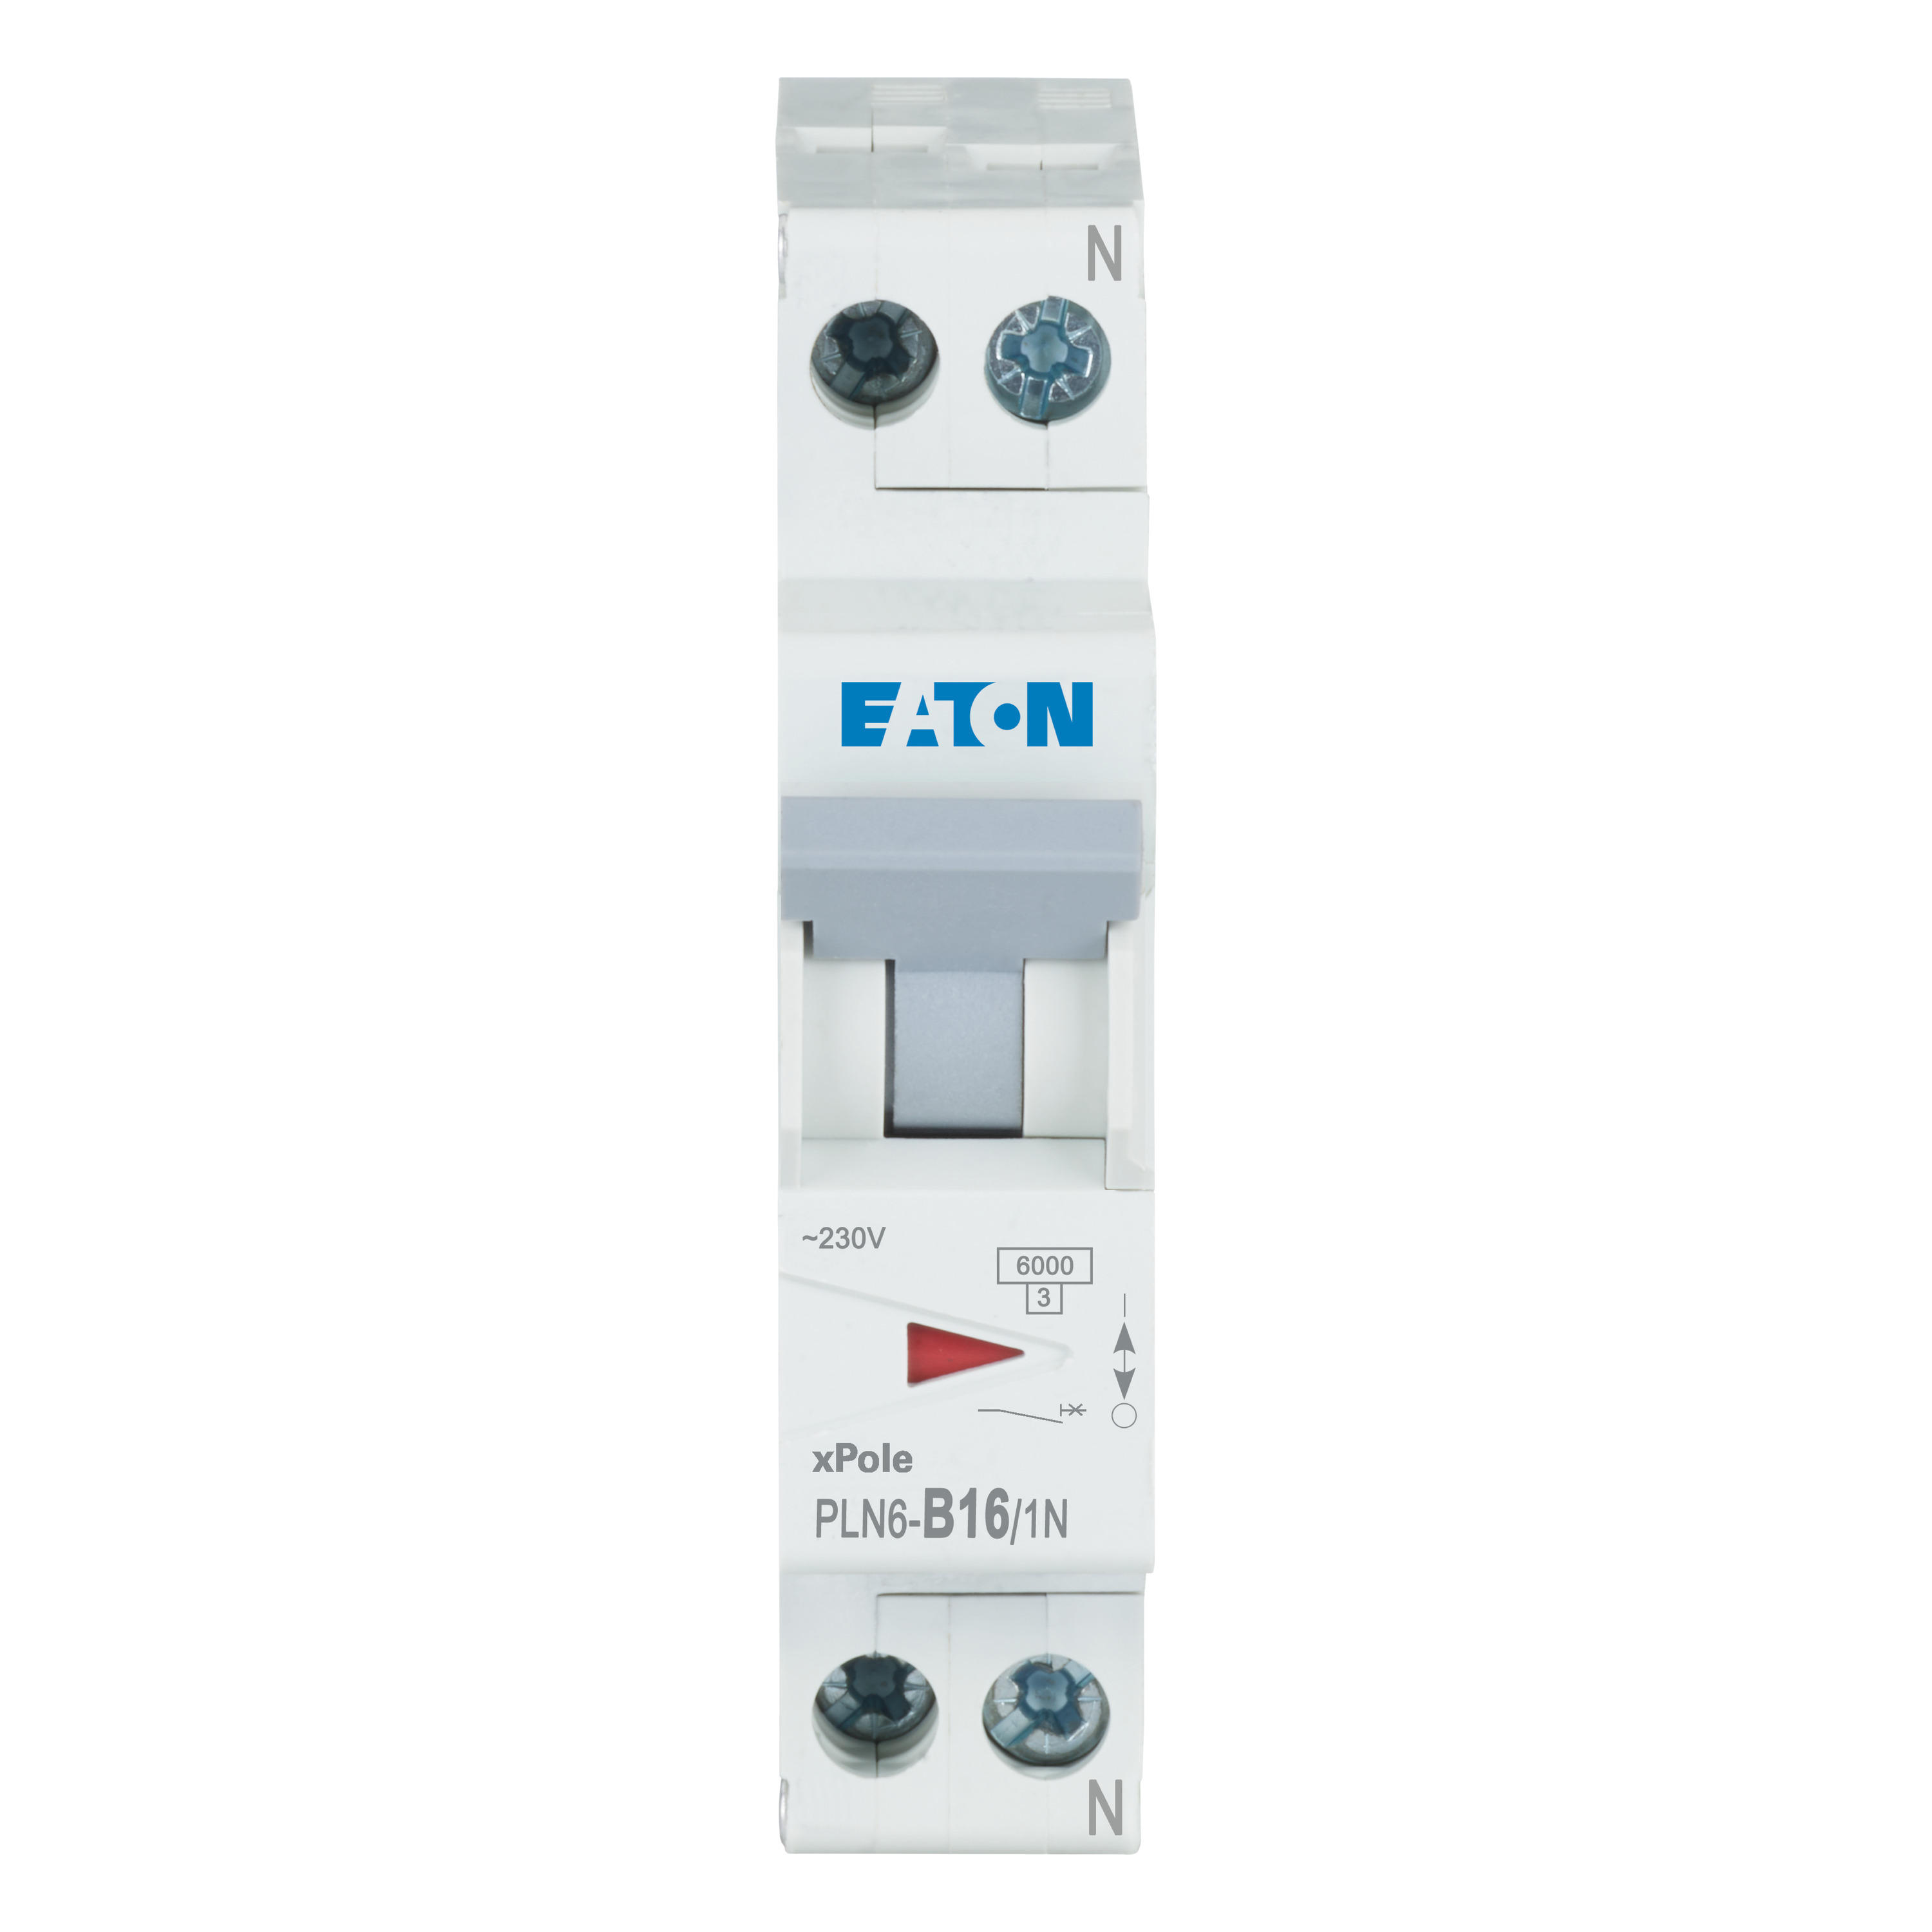 Eaton installatieautomaat 1-polig + nul 16A B-karakteristiek PLN6-B16/1N